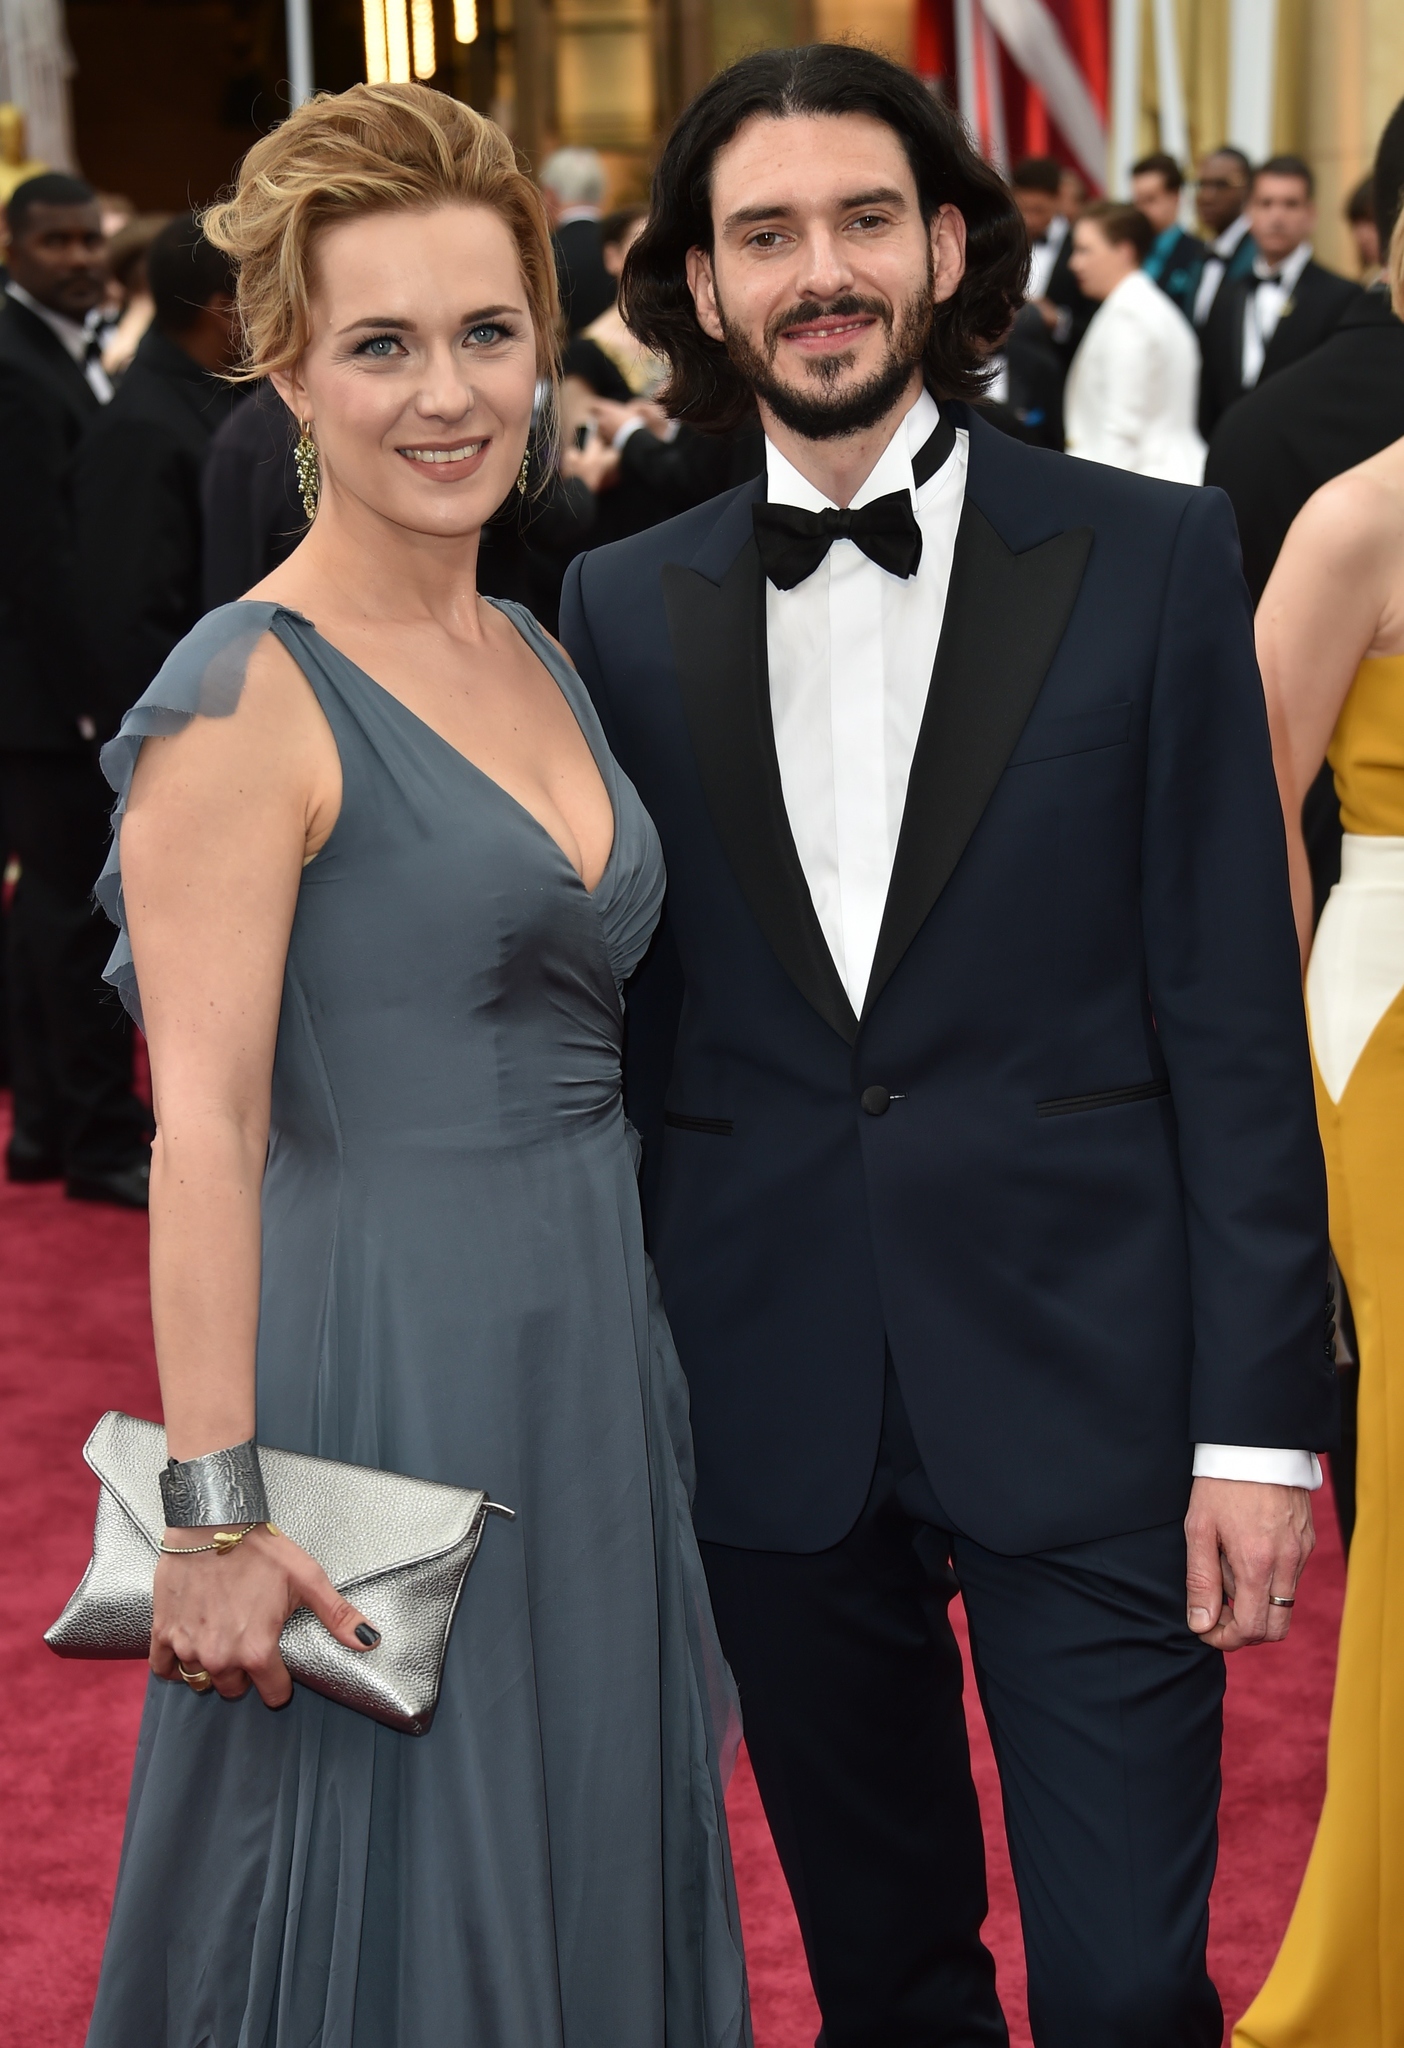 Tomasz Sliwinski and Magda Hueckel at event of The Oscars (2015)